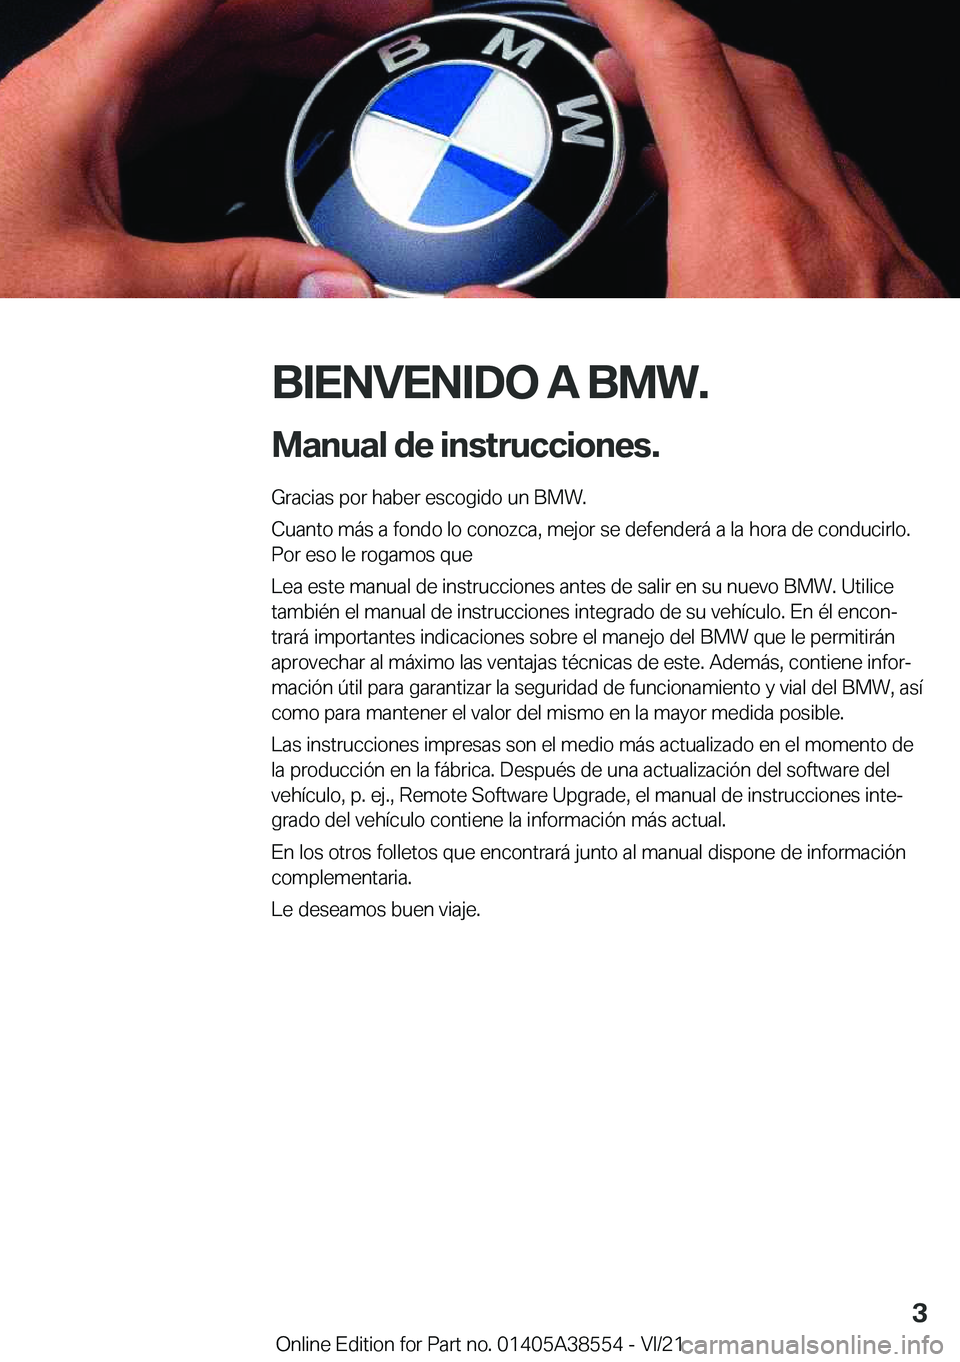 BMW X6 2022  Manuales de Empleo (in Spanish) �B�I�E�N�V�E�N�I�D�O��A��B�M�W�.
�M�a�n�u�a�l��d�e��i�n�s�t�r�u�c�c�i�o�n�e�s�. �G�r�a�c�i�a�s��p�o�r��h�a�b�e�r��e�s�c�o�g�i�d�o��u�n��B�M�W�.
�C�u�a�n�t�o��m�